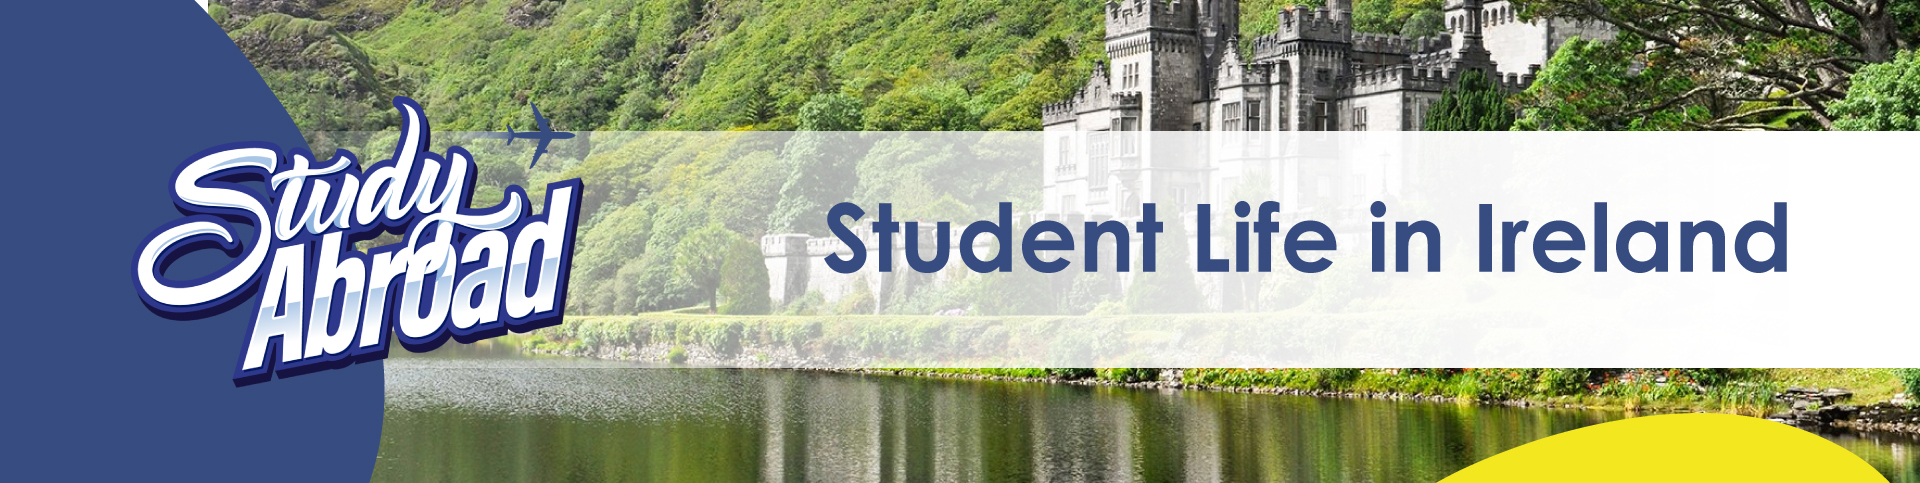 Student Life in Ireland